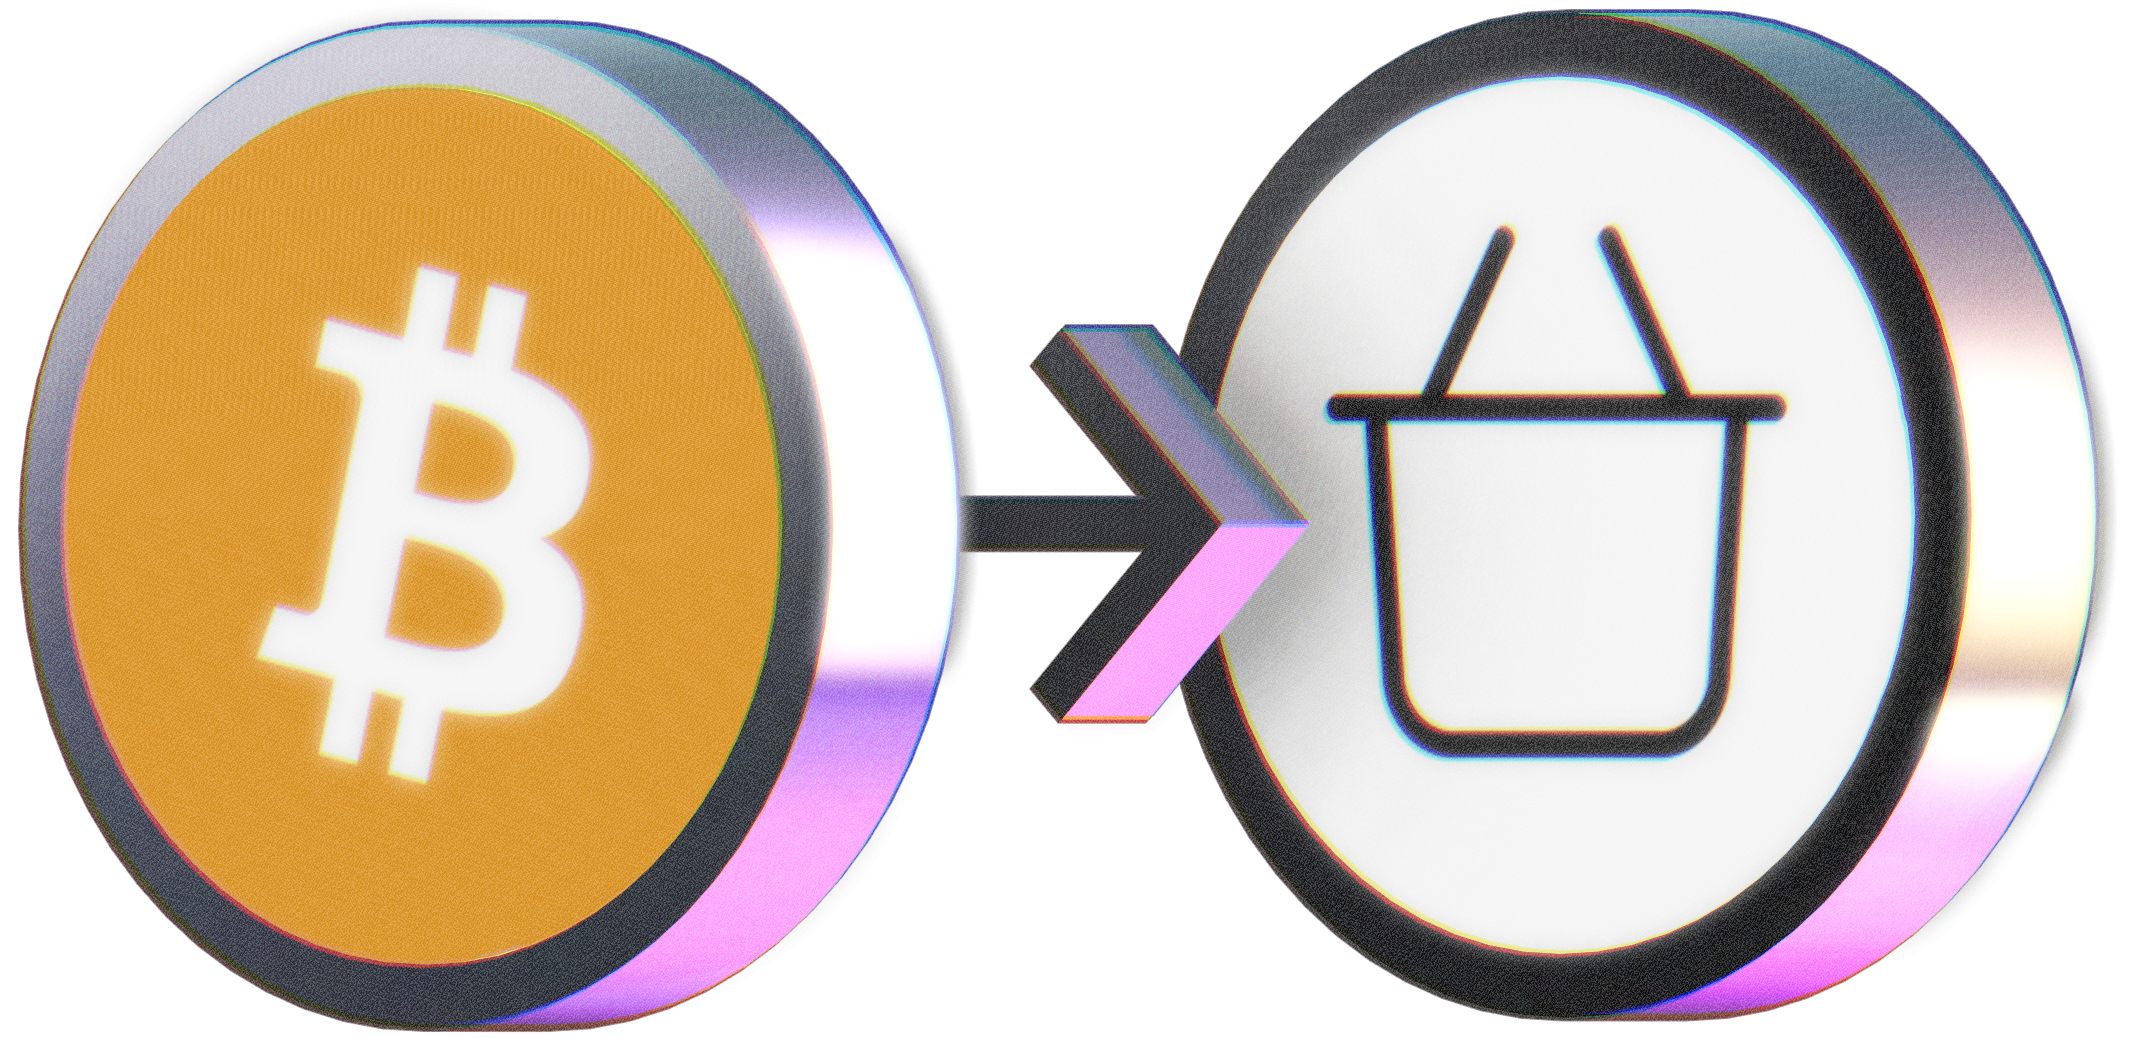 Bitcoin (BTC) and shopping cart images